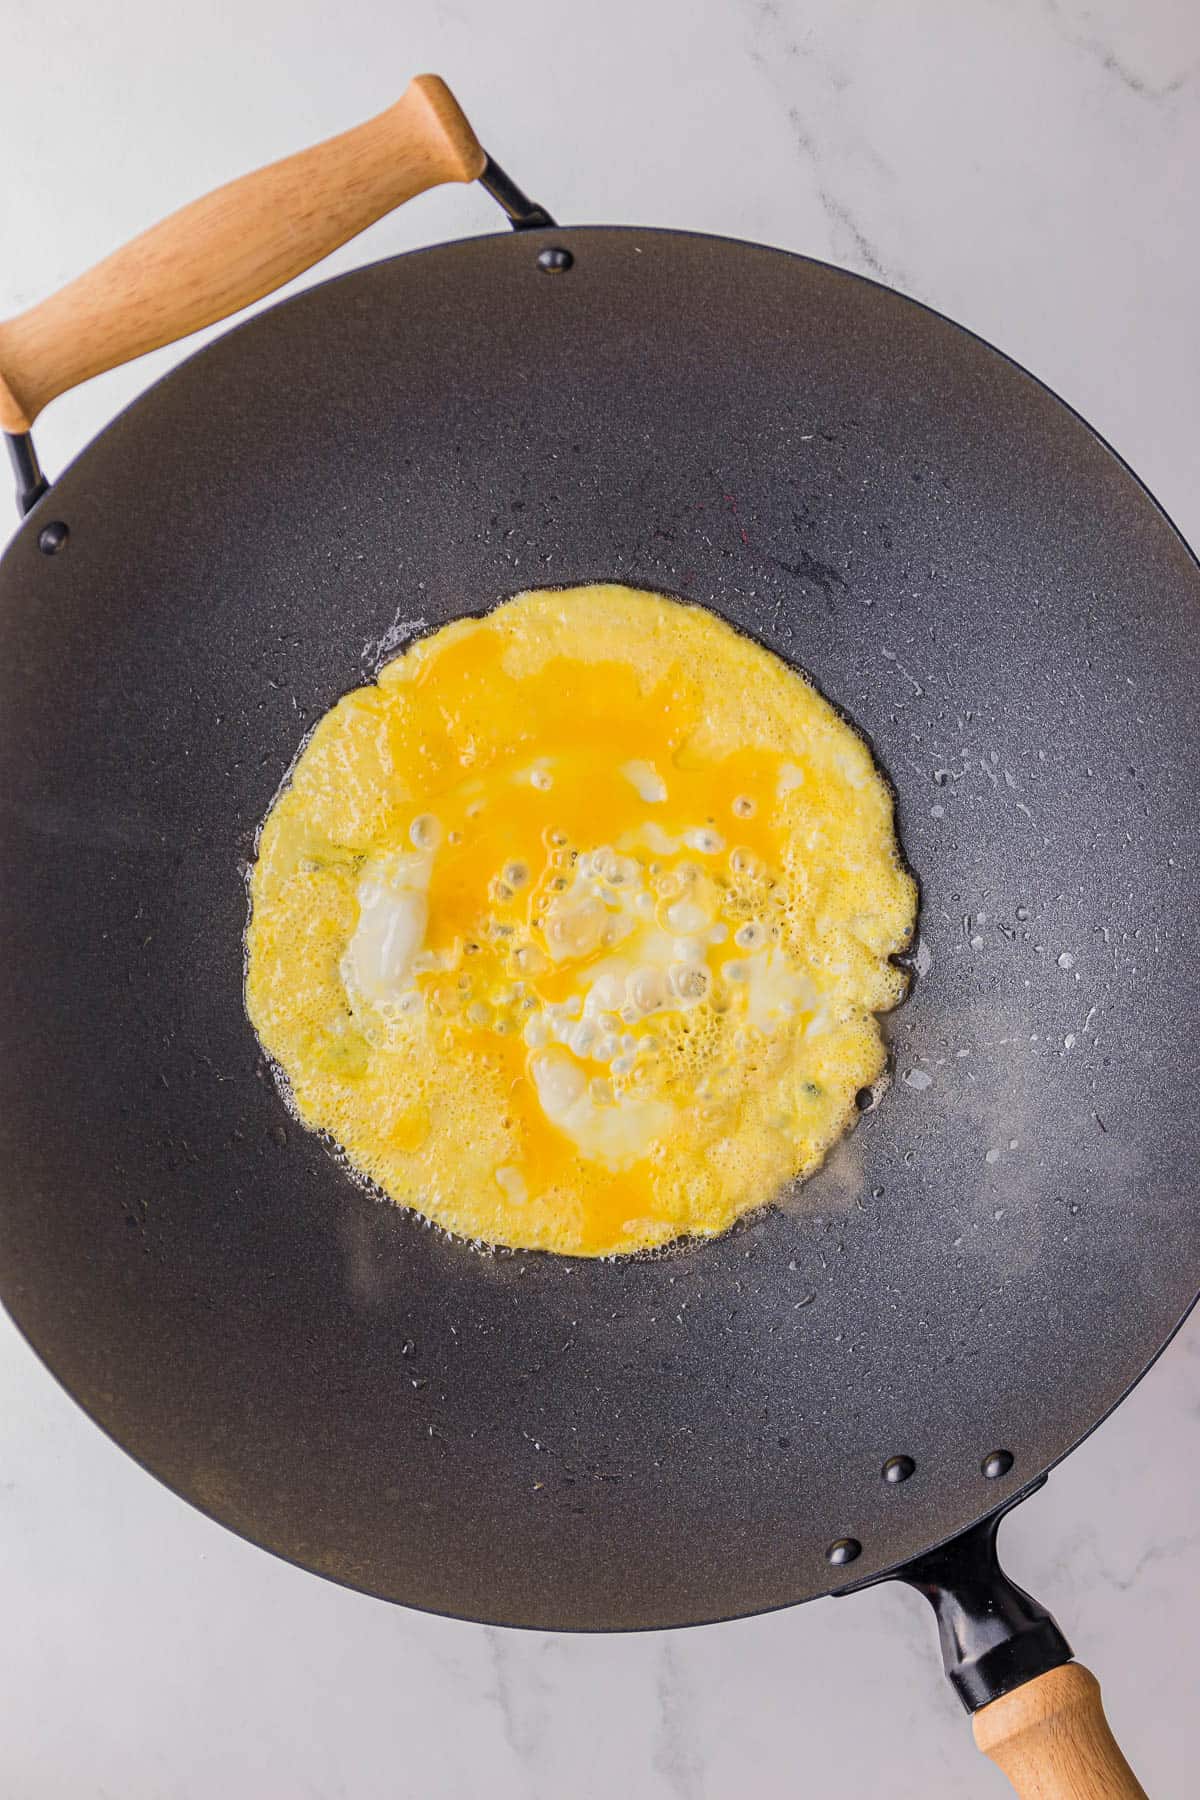 cooking a scrambled egg in a wok.